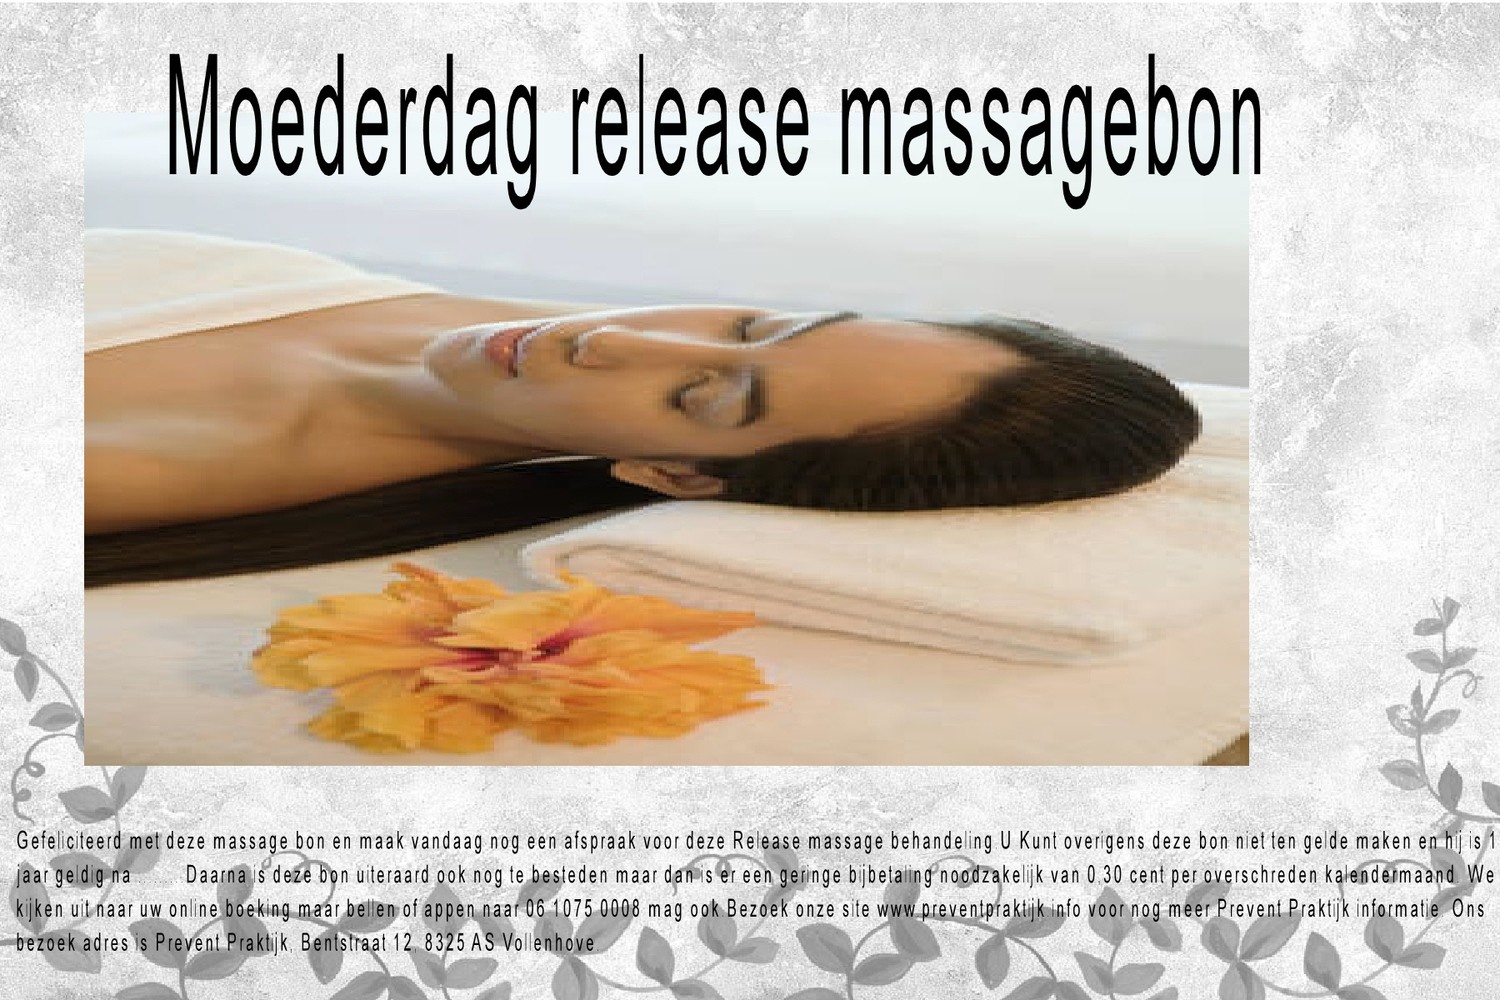 Body stress release massage bon